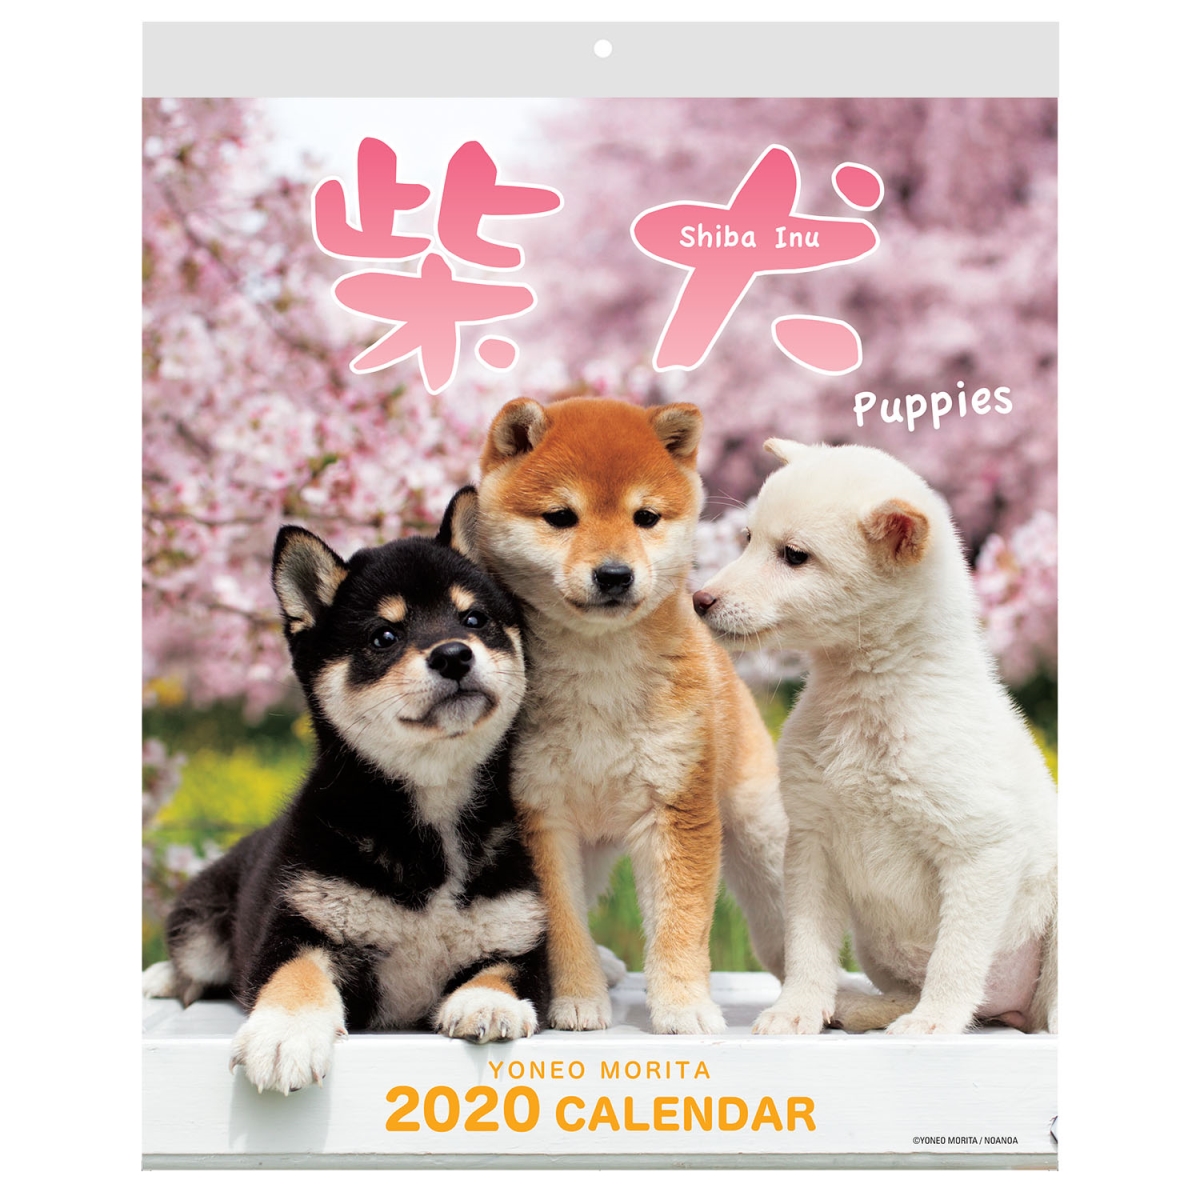 Shibainucalwall2020 Shiba Inu 2020 Wall Calendar With Adorable Shiba Dogs Puppies Pictures & Us Holidays